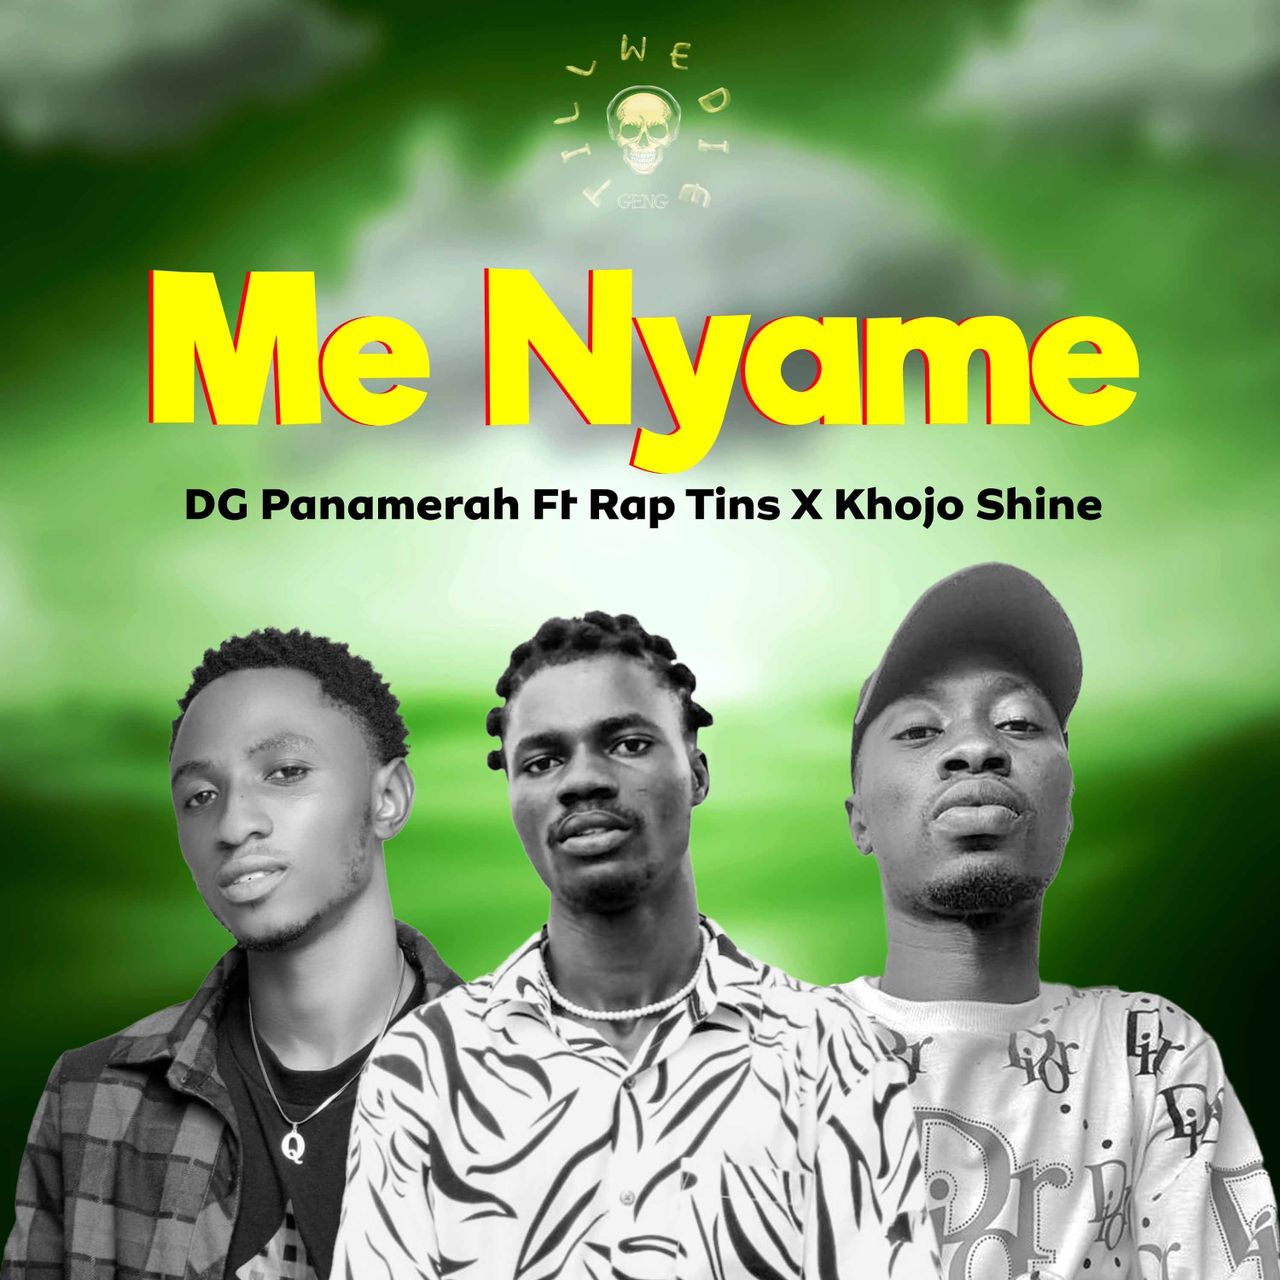 DG Panamerah - Me Nyame Ft. Rap Tins X Khojo Shine (Mixed By BigJay) 30